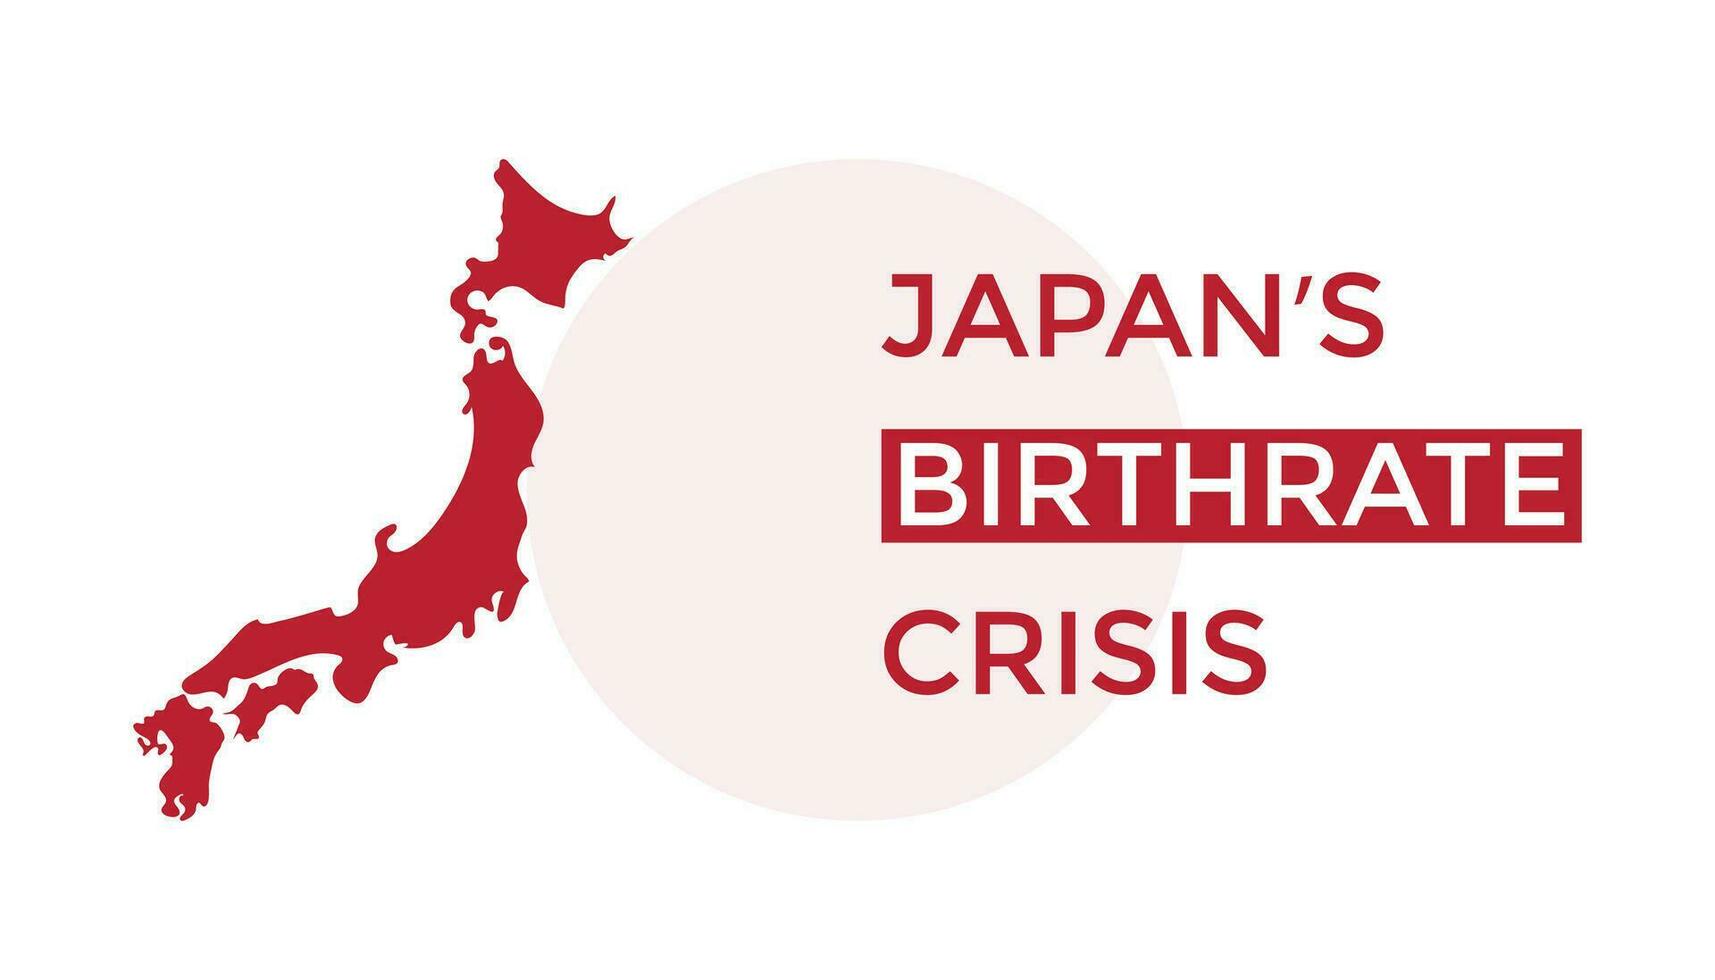 Japan Birthrate crisis vector illustration poster design, low birthrate problem